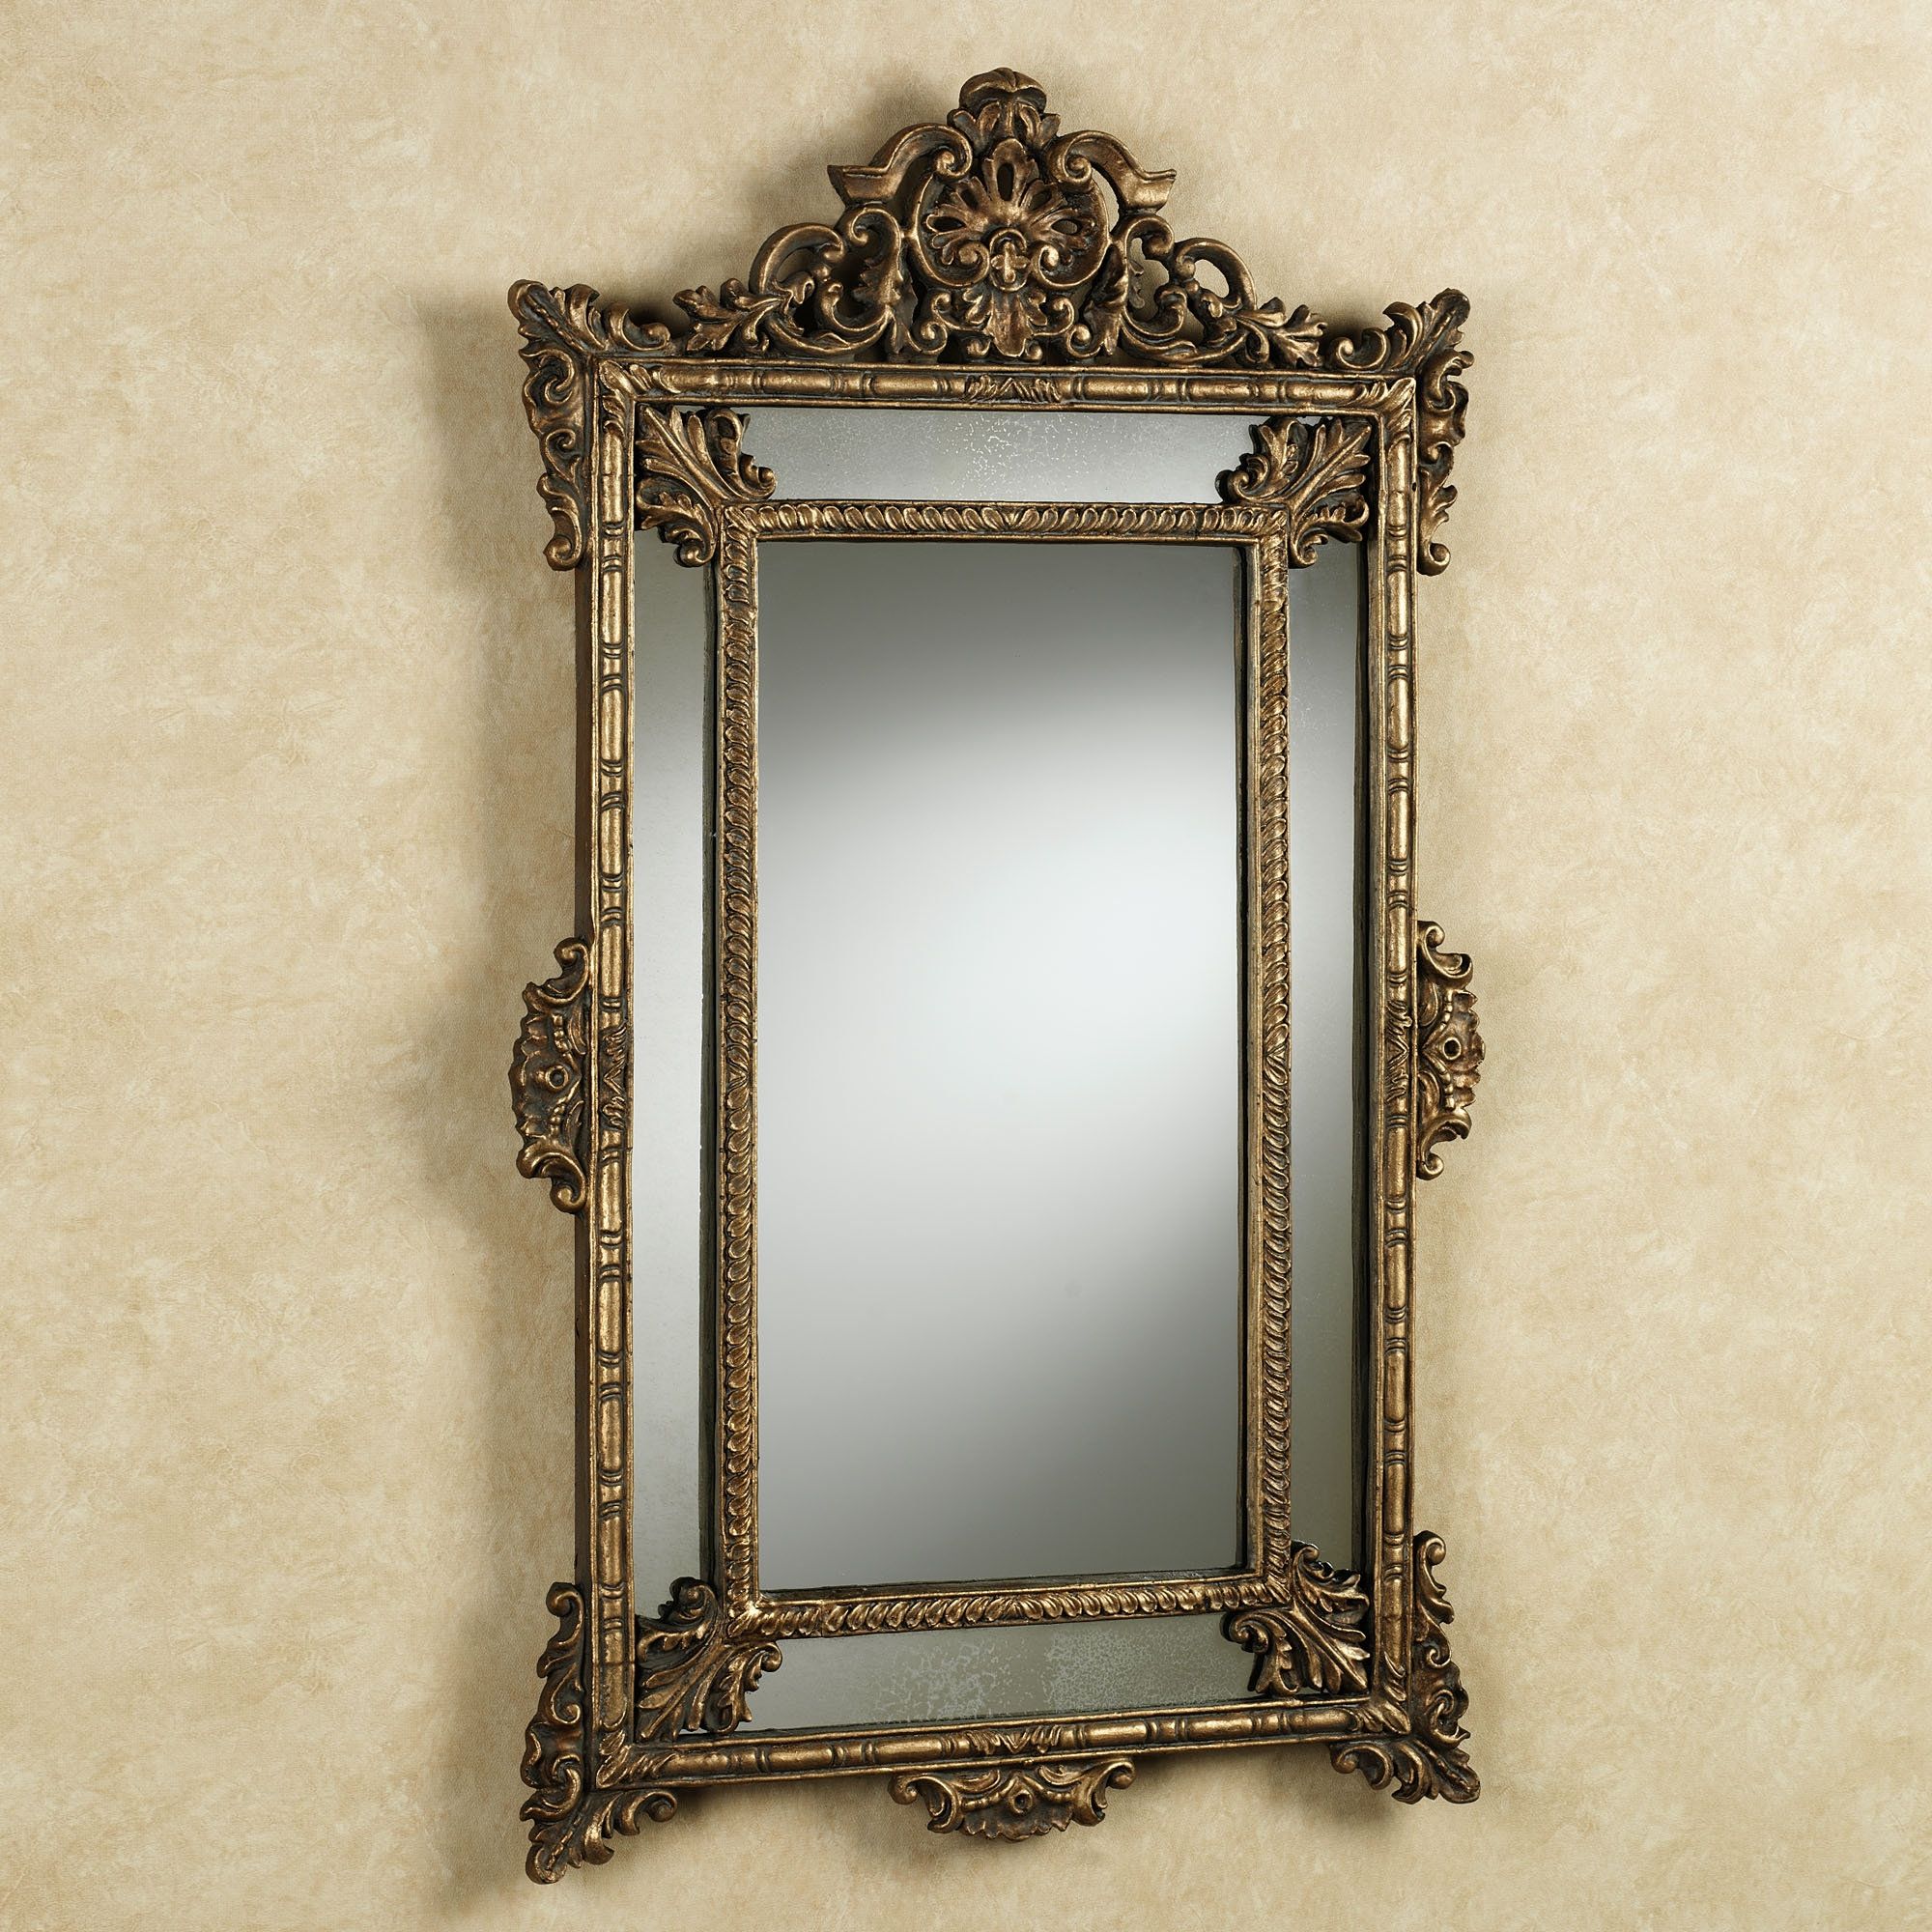 Antique Mirror Wallpaper Wallpapersafari Regarding Old Fashioned Mirrors (View 8 of 15)